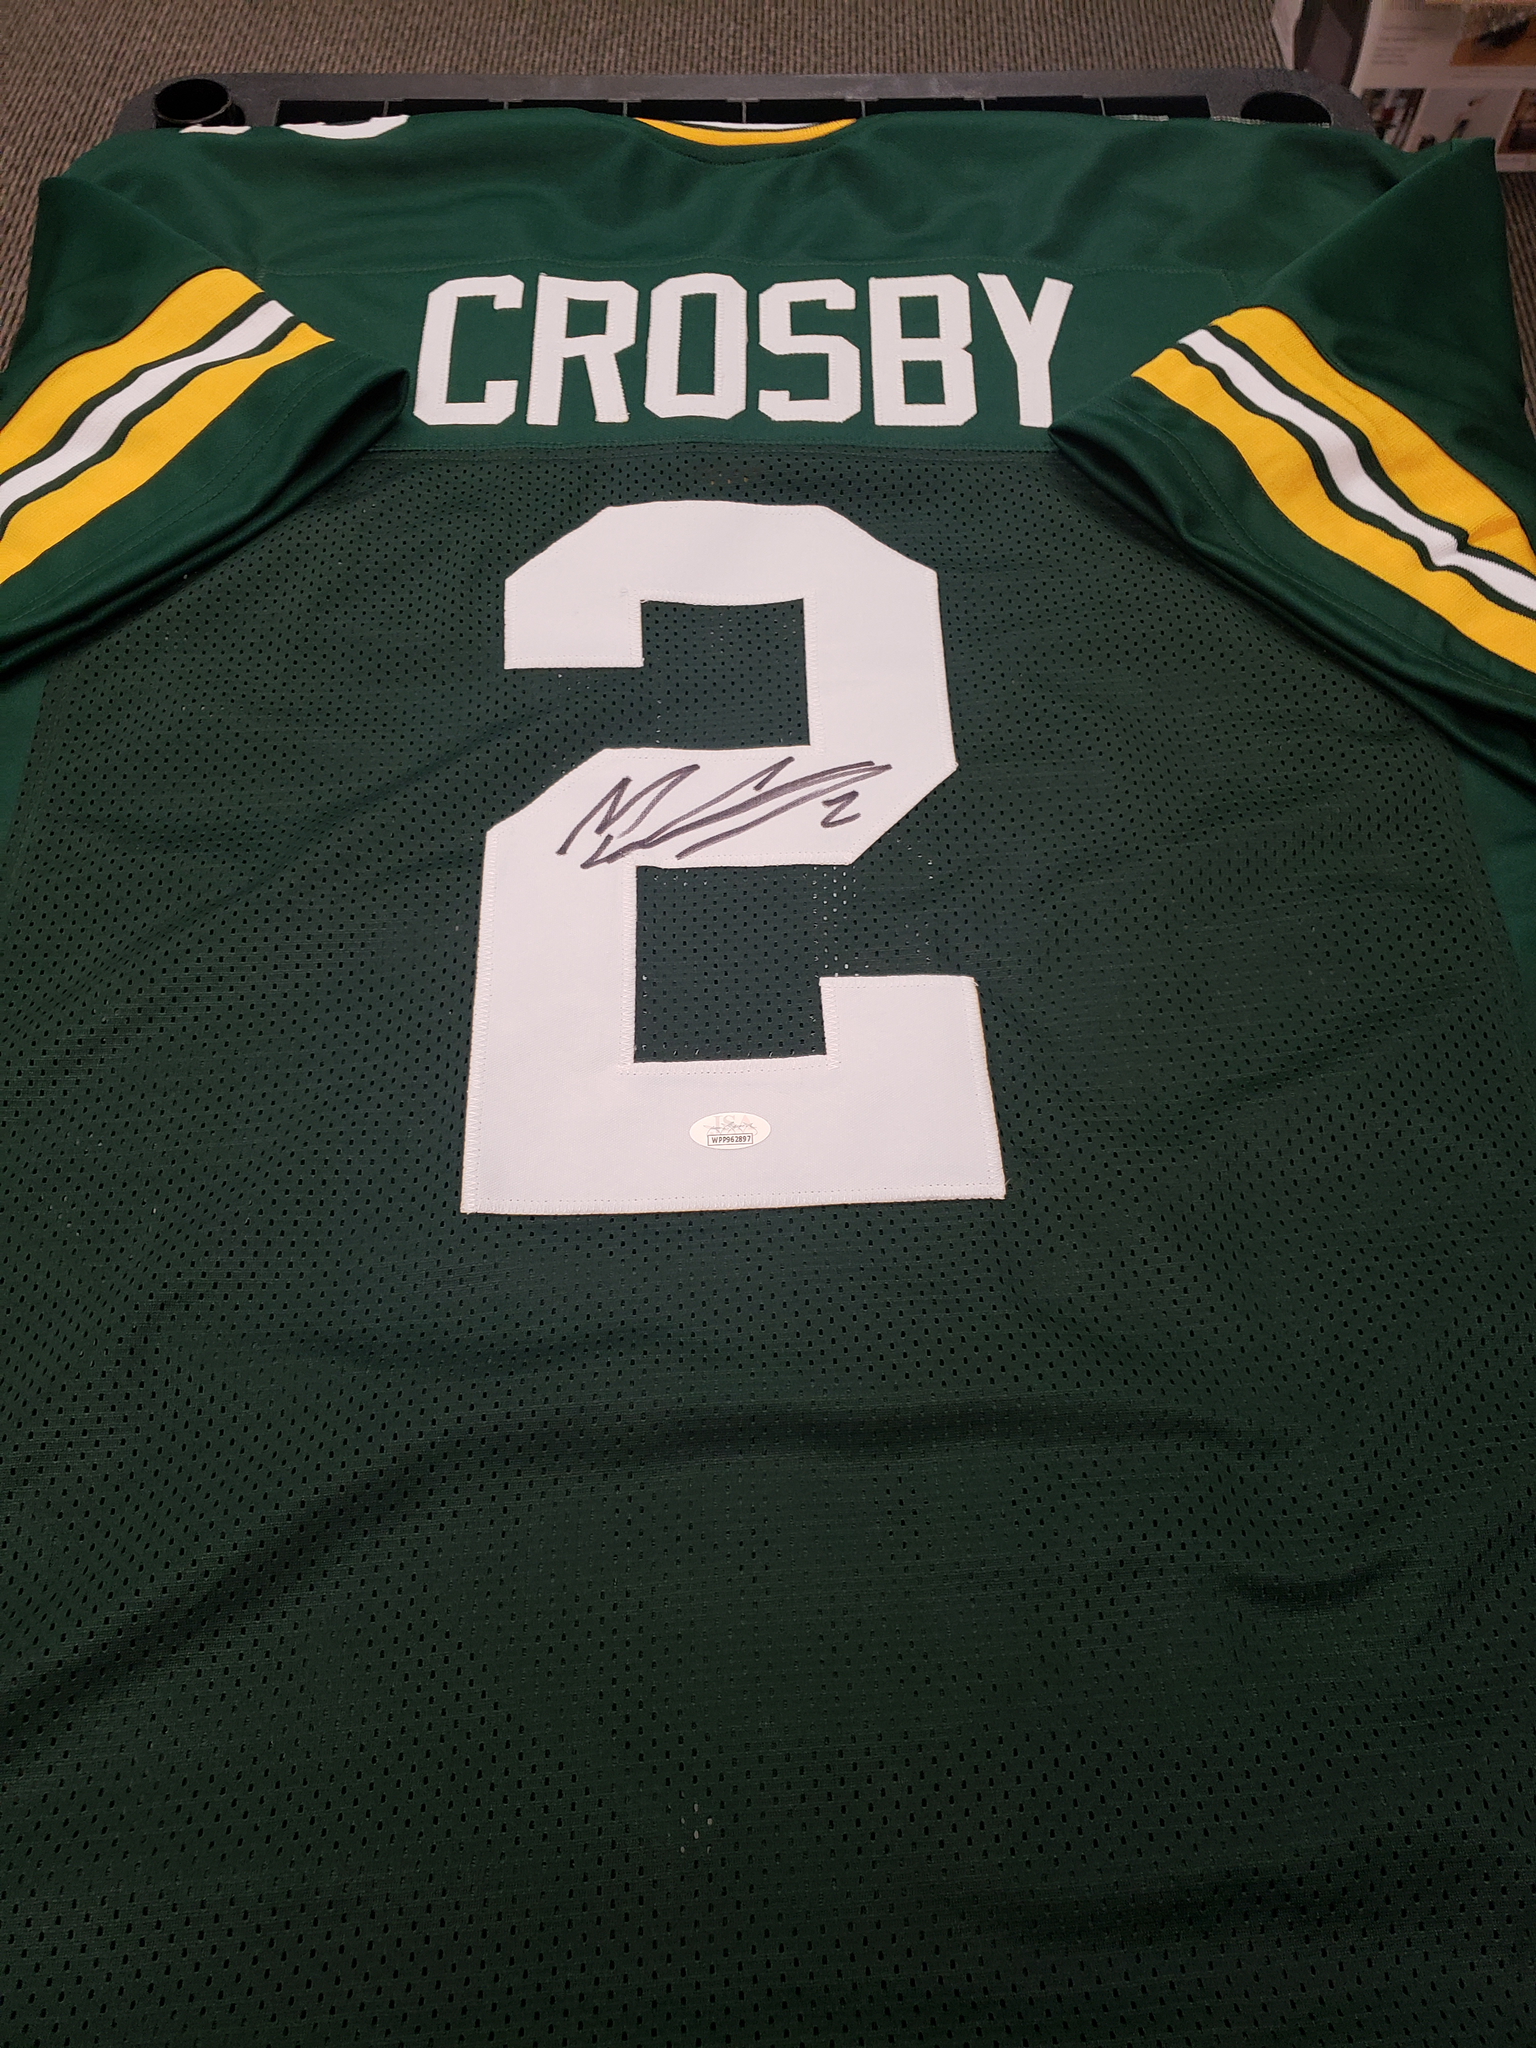 mason crosby signed jersey